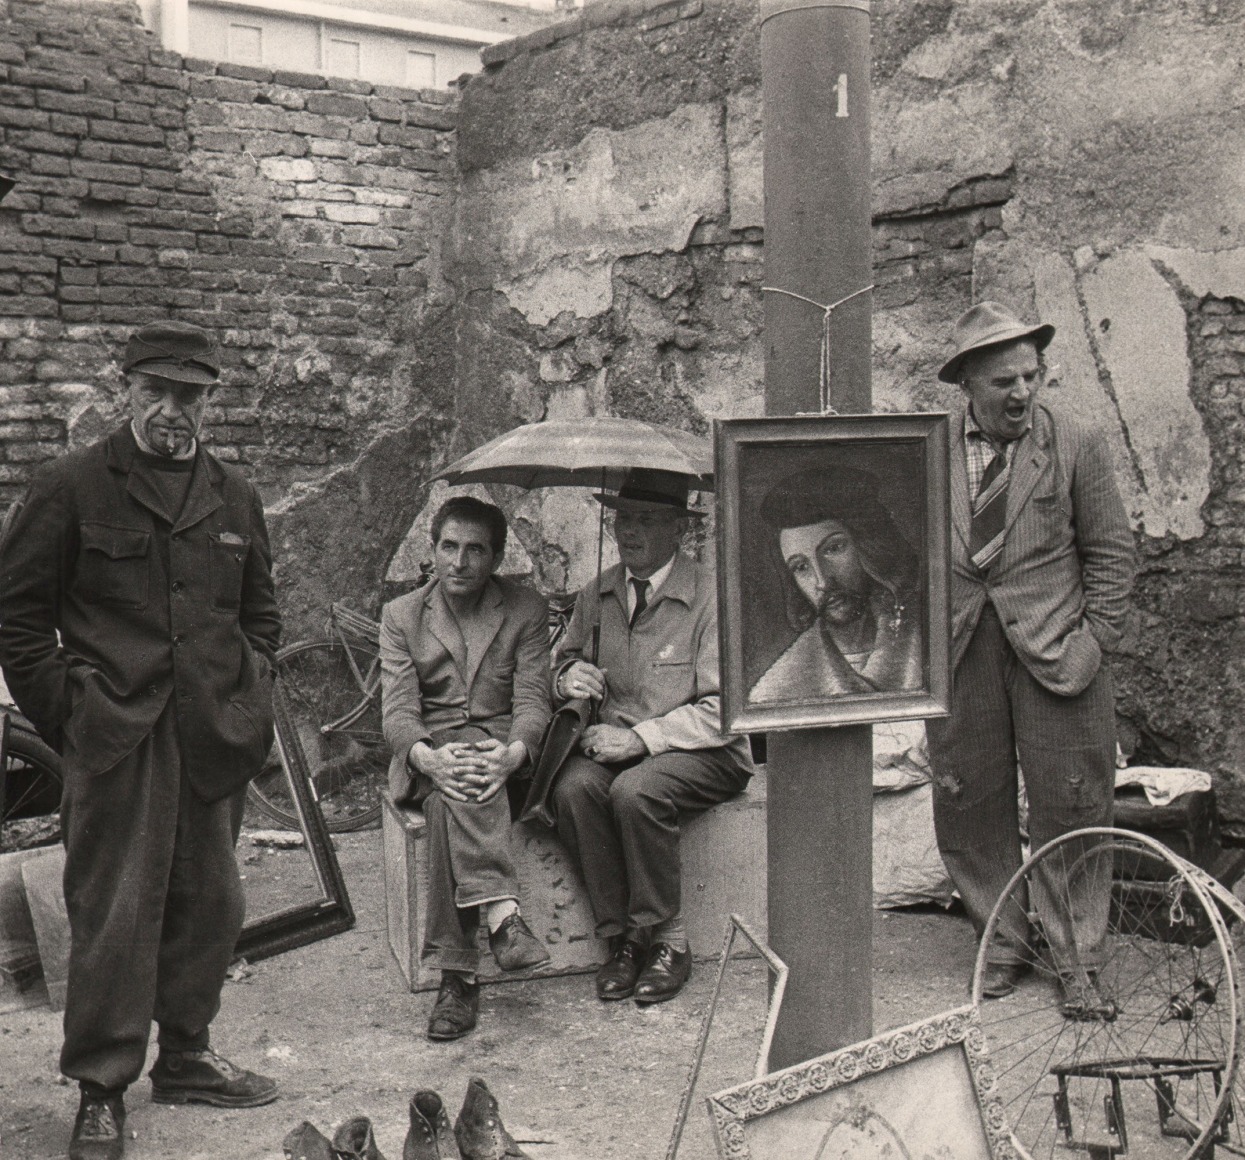 Mario Finocchiaro, Milano - Fiera di Sinigaglia, ​1959. Two men seated beneath a small umbrella are flanked by two men standing amongst various objects in a yard sale-like setting.